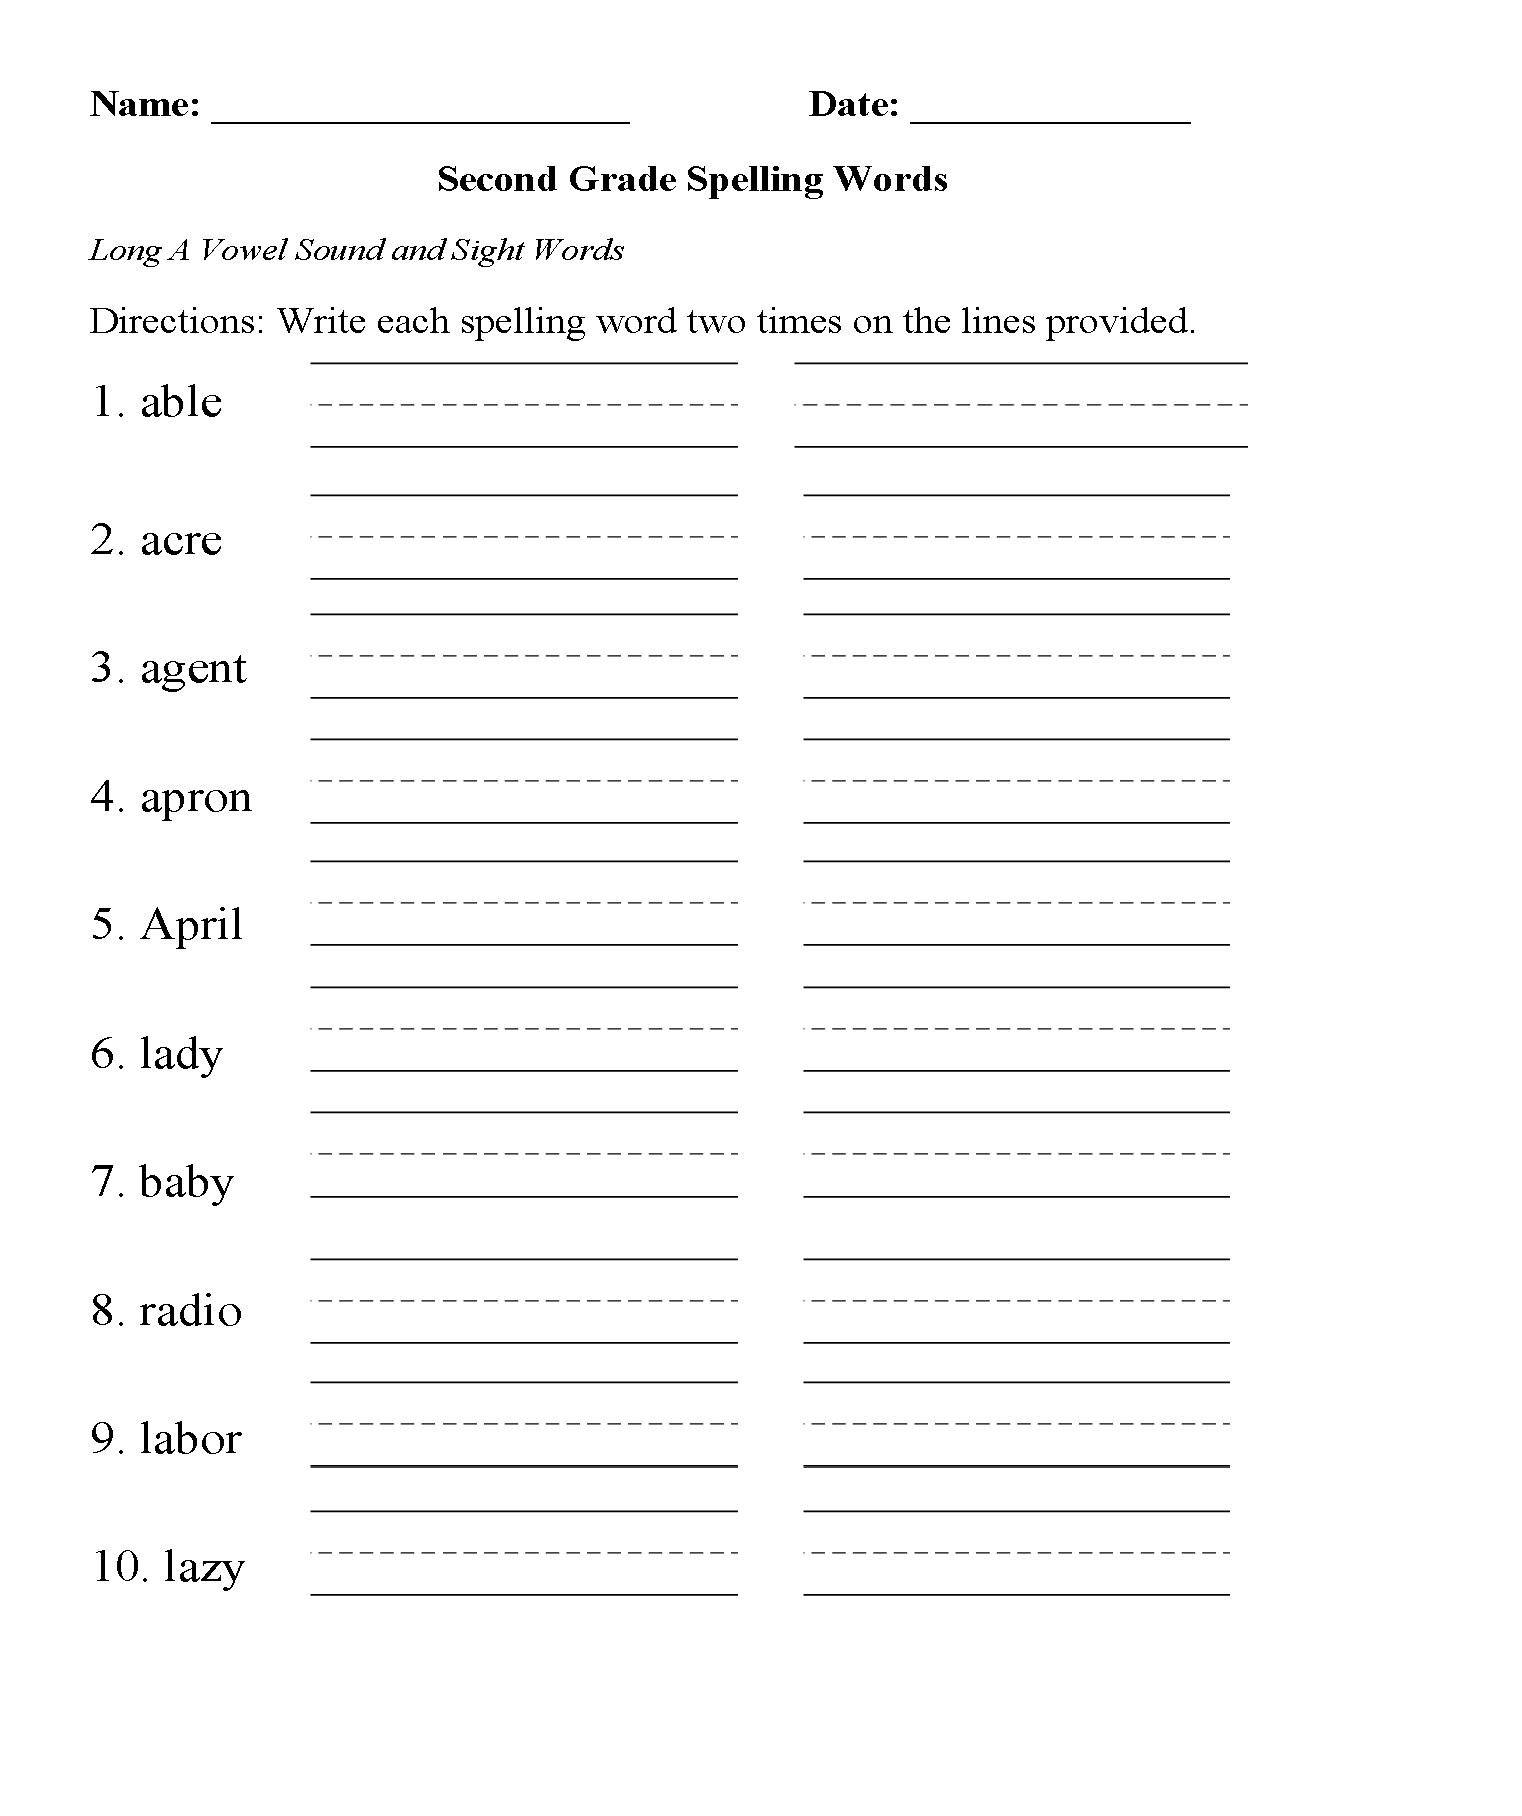 24nd Grade Spelling Worksheets - Best Coloring Pages For Kids For 2nd Grade Sight Words Worksheet